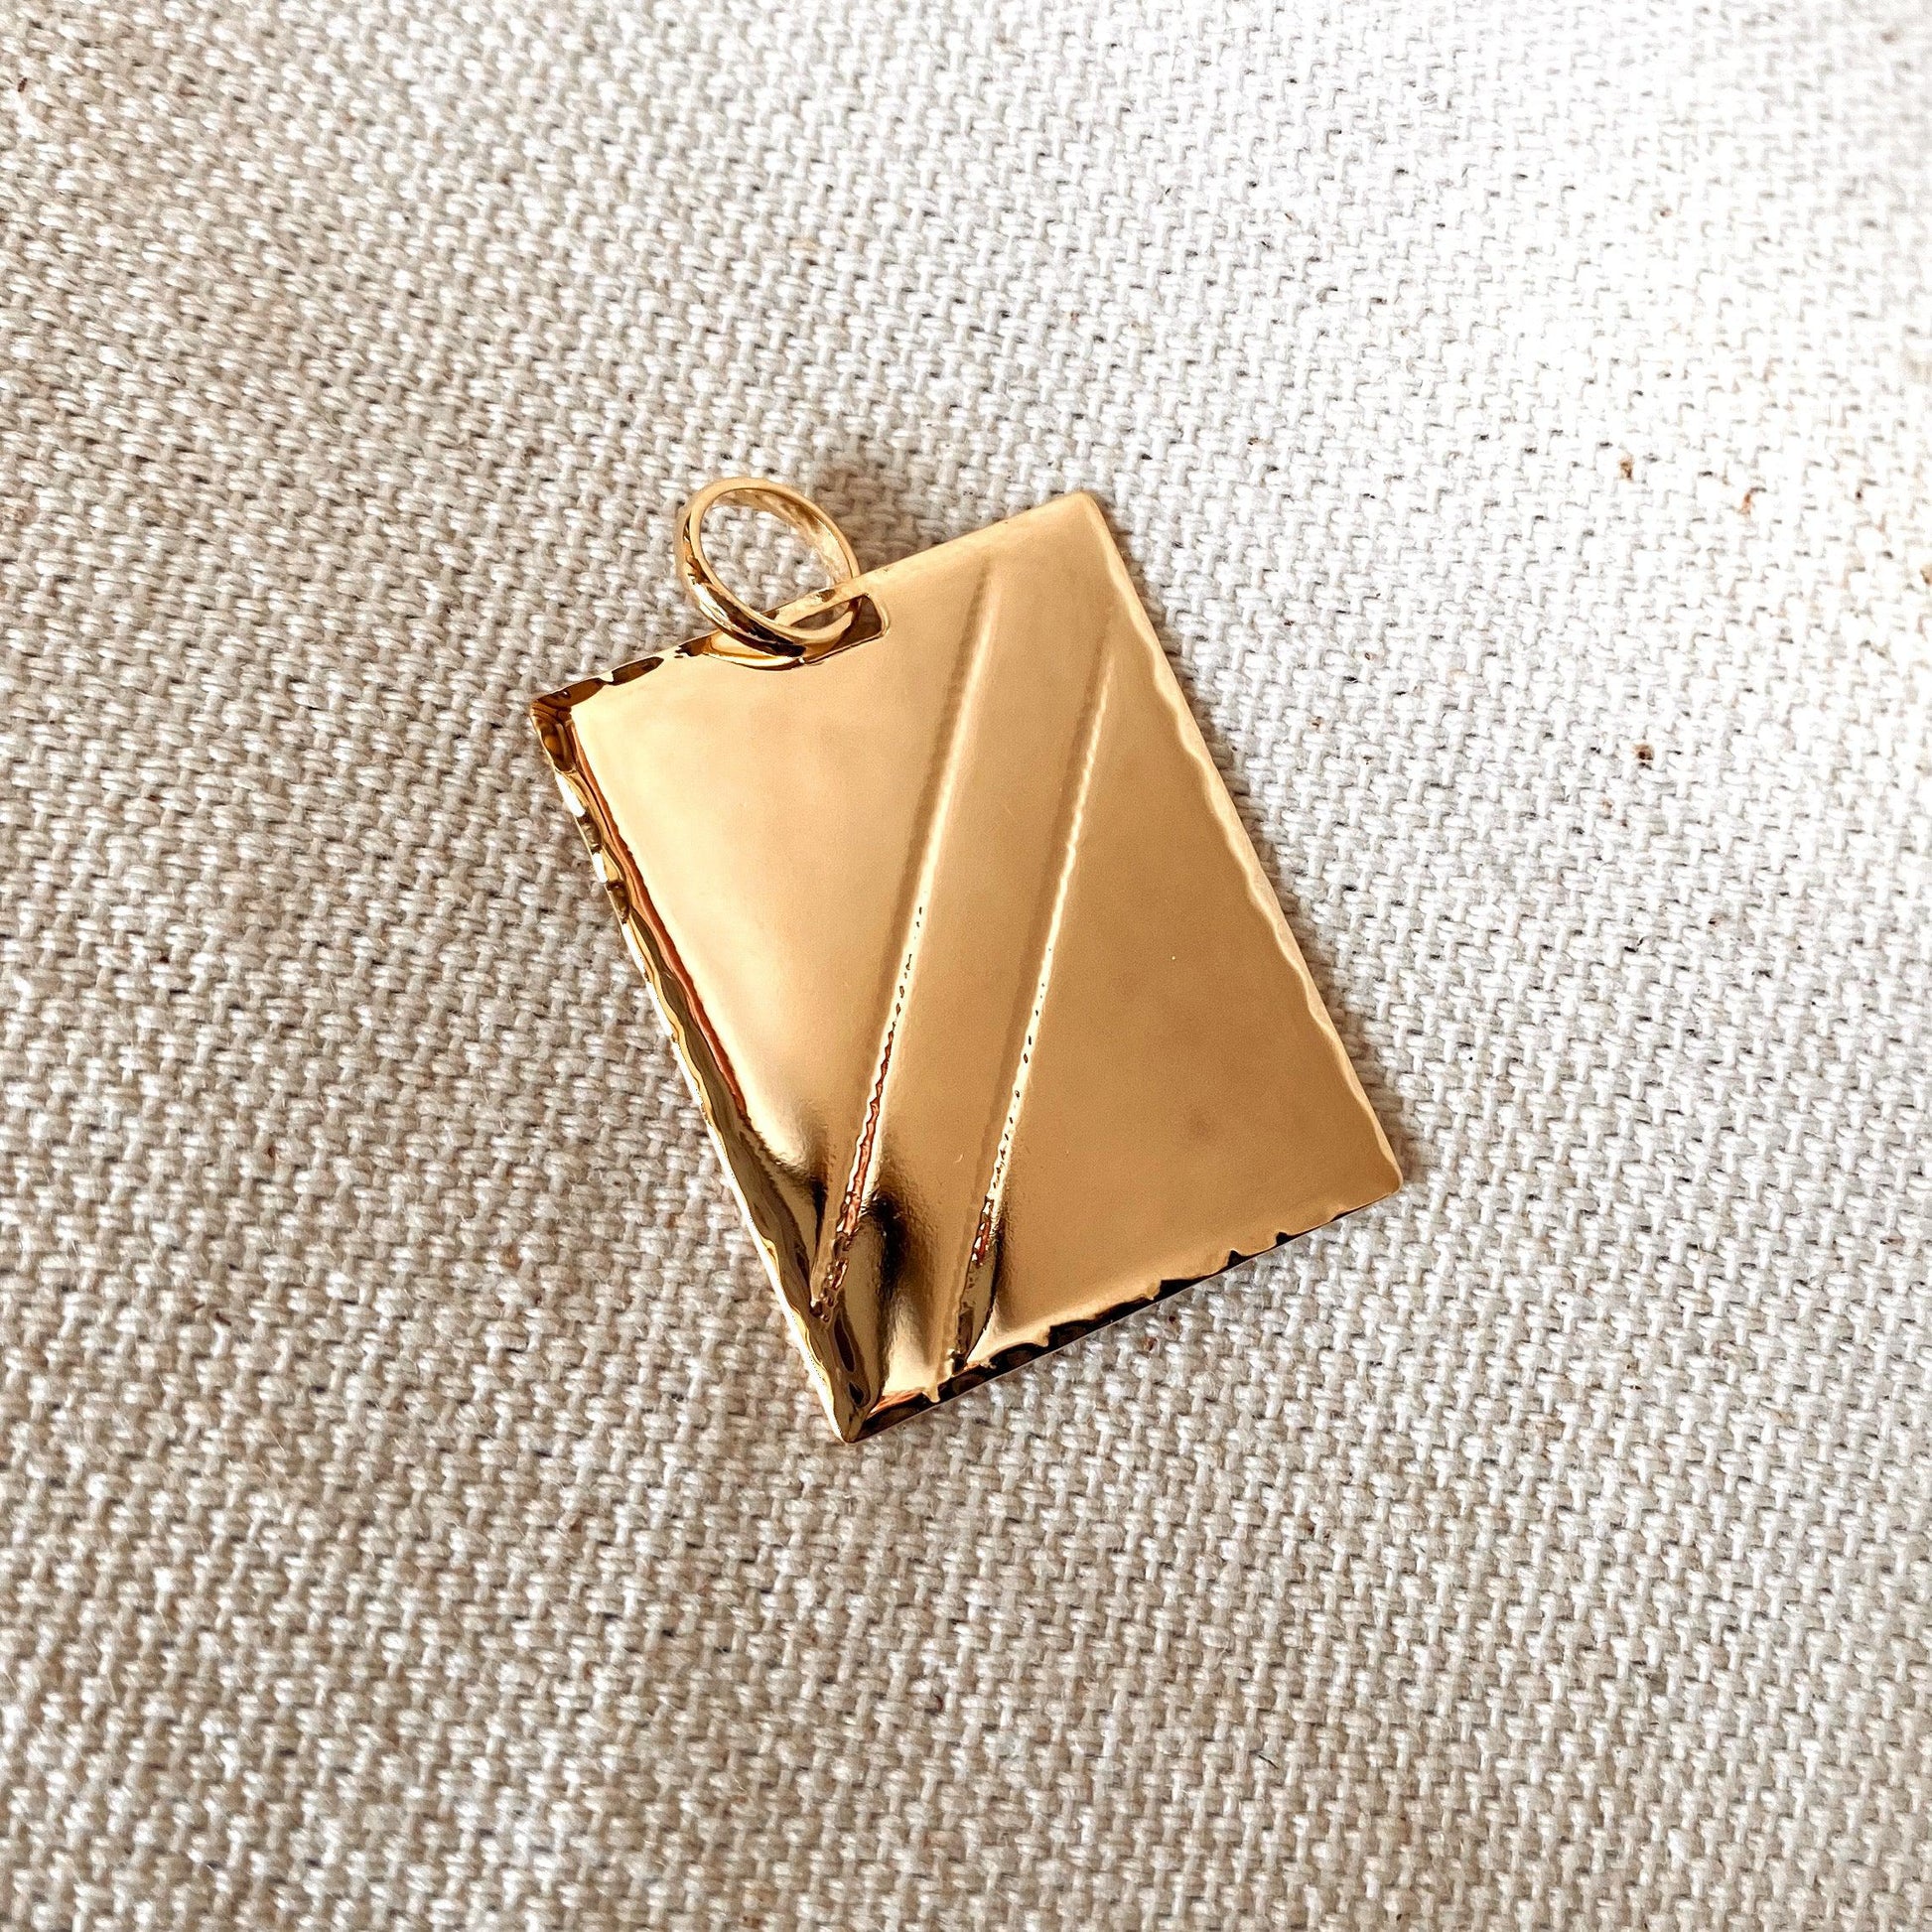 GoldFi 18k Gold Filled Luxury Tag Plate Rectangle Pendant Unisex Diamond Cut Frame